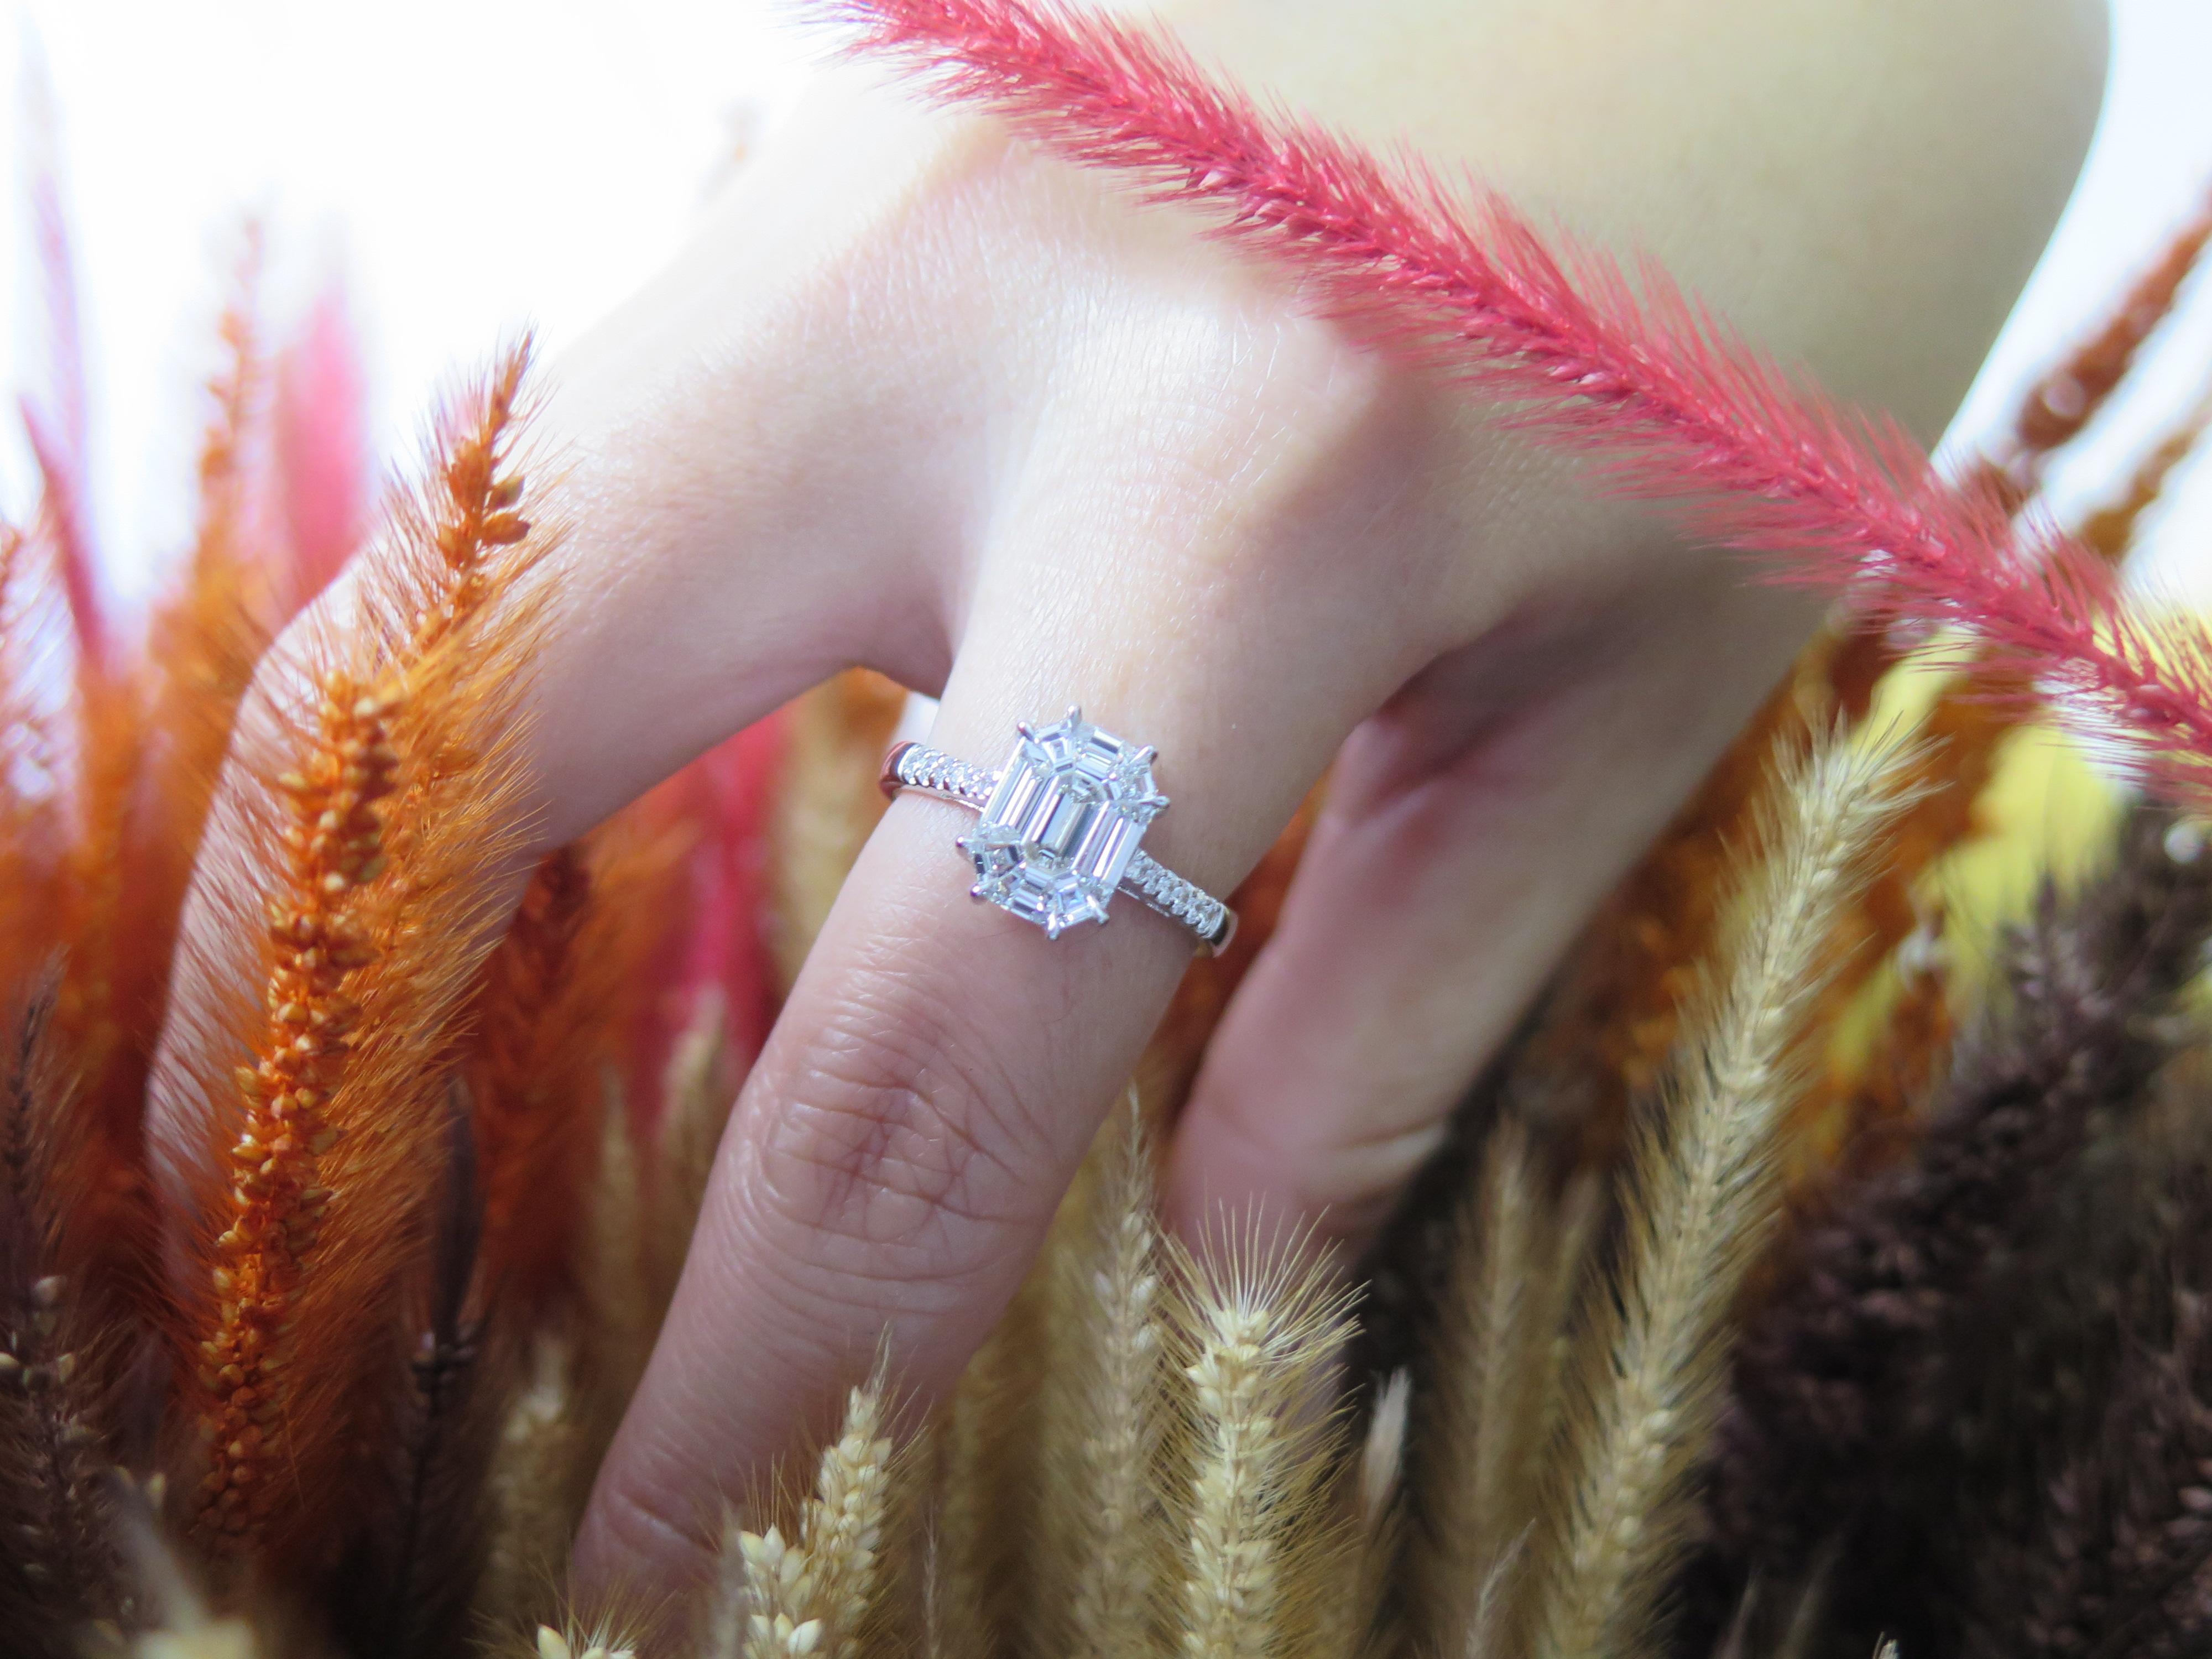 Women's or Men's 18 Karat White Gold Emerald Cut Diamond Engagement Ring For Sale